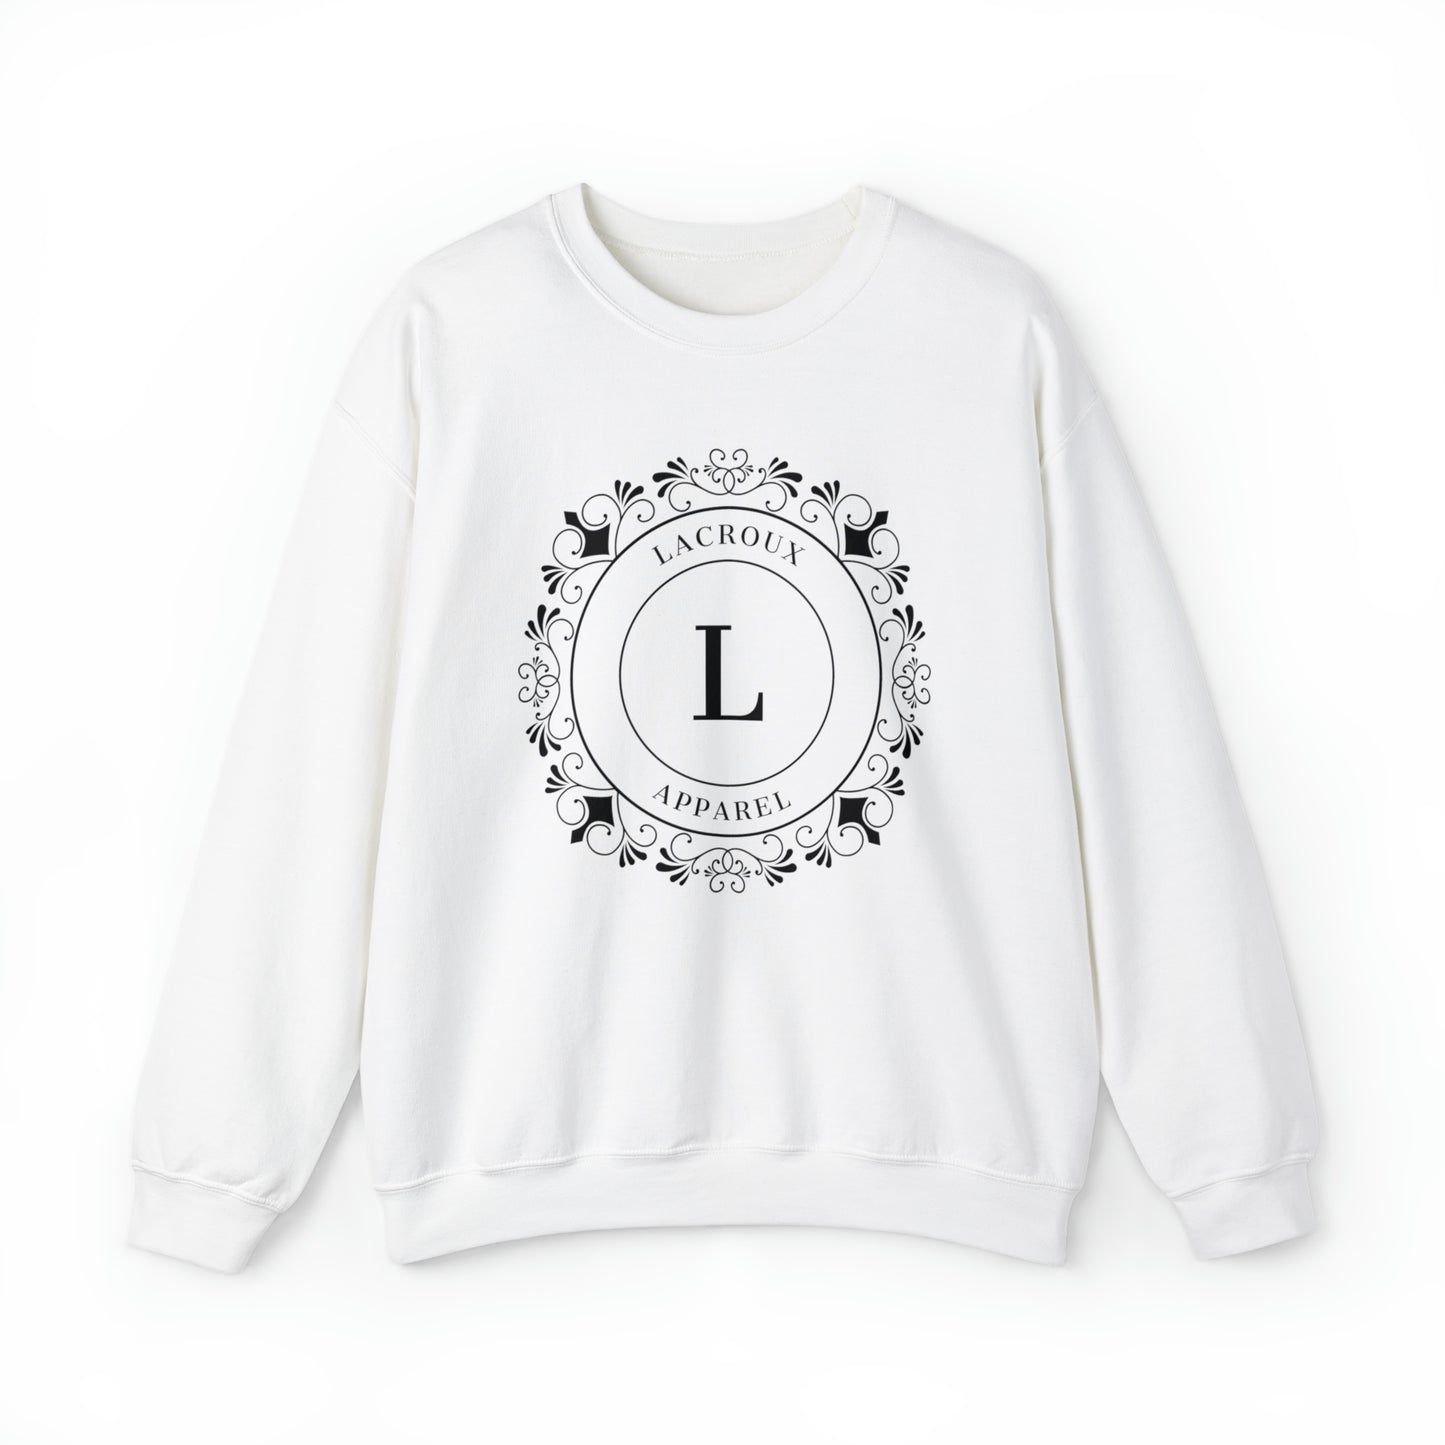 Unisex Heavy Blend™ Crewneck Sweatshirt 'Lacroux Logo'